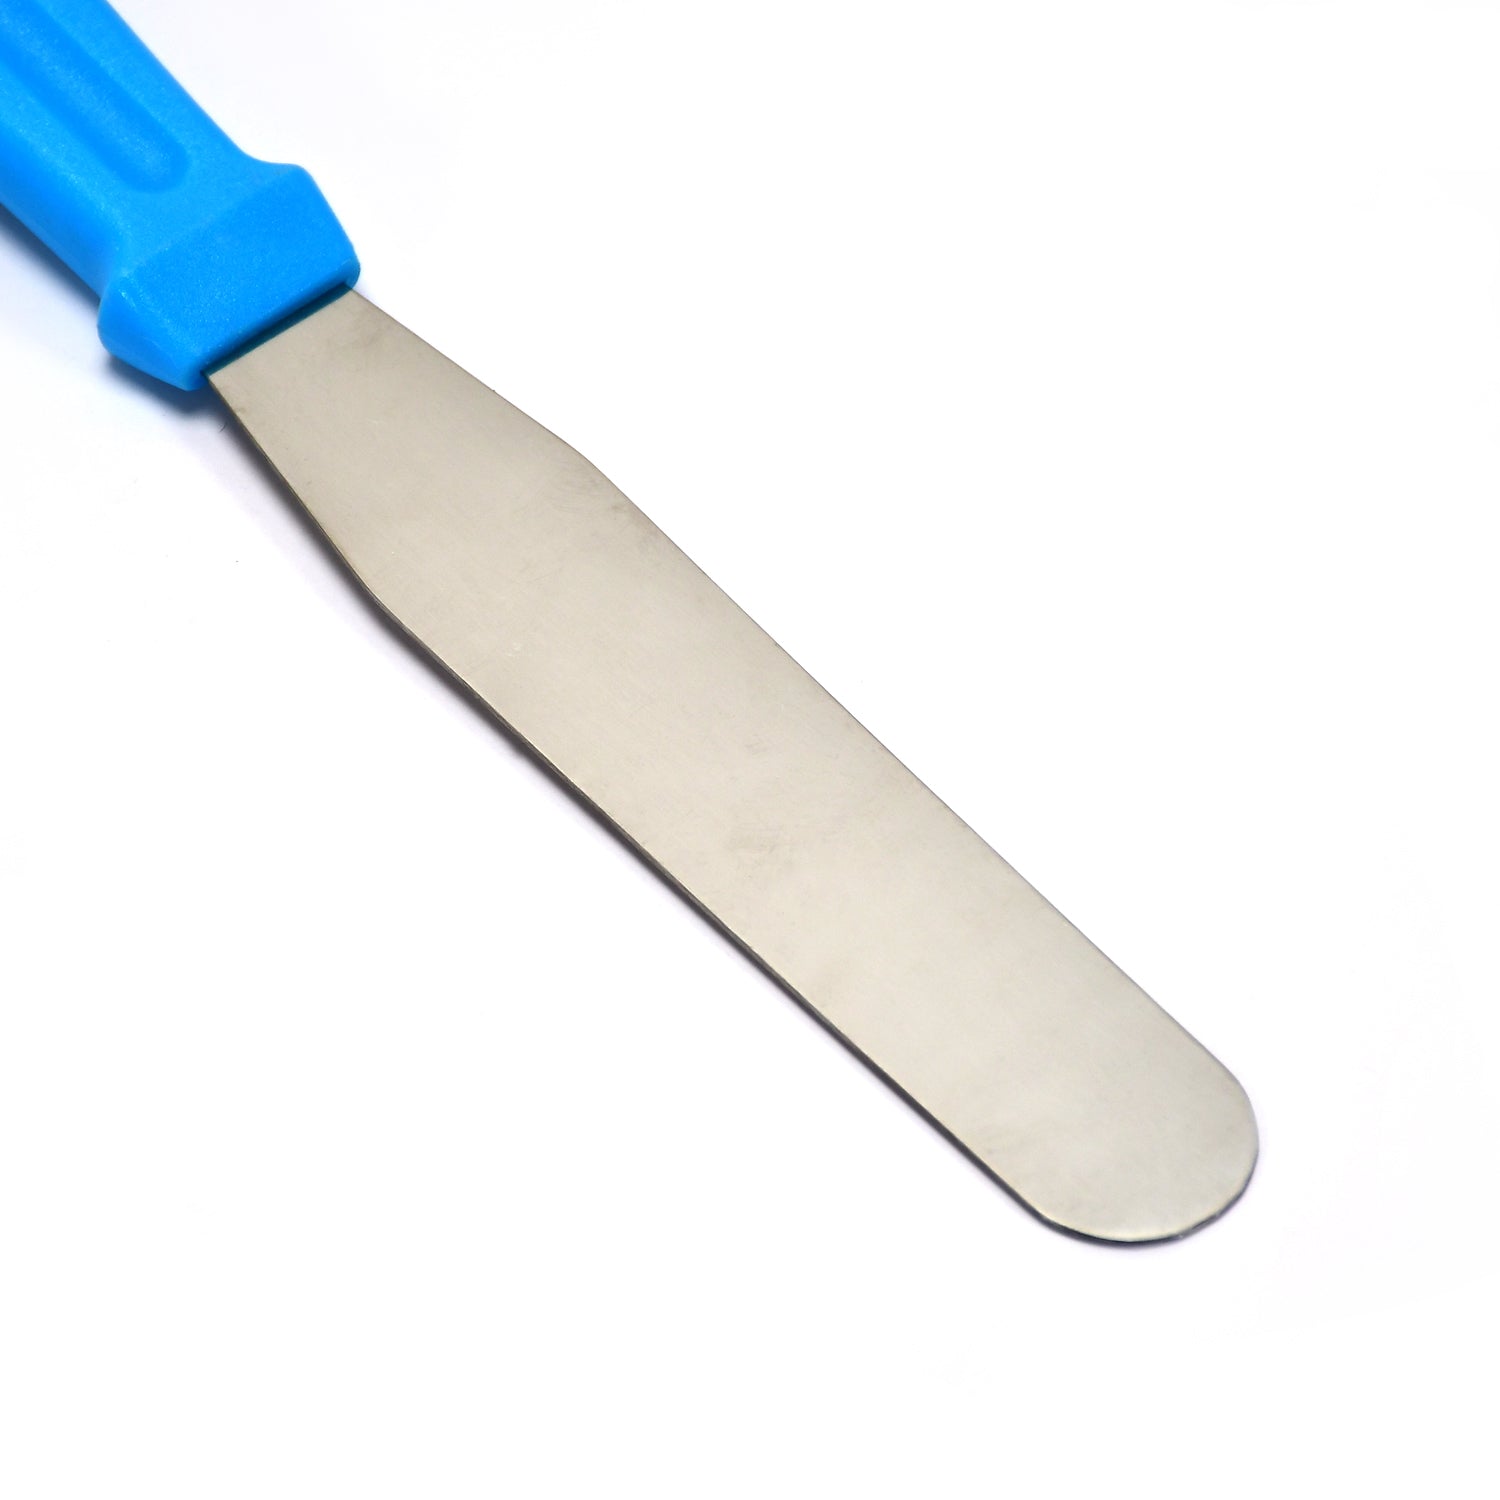 5108 Angular Professional Steel Cake Palette Knife Icing Spatula DeoDap